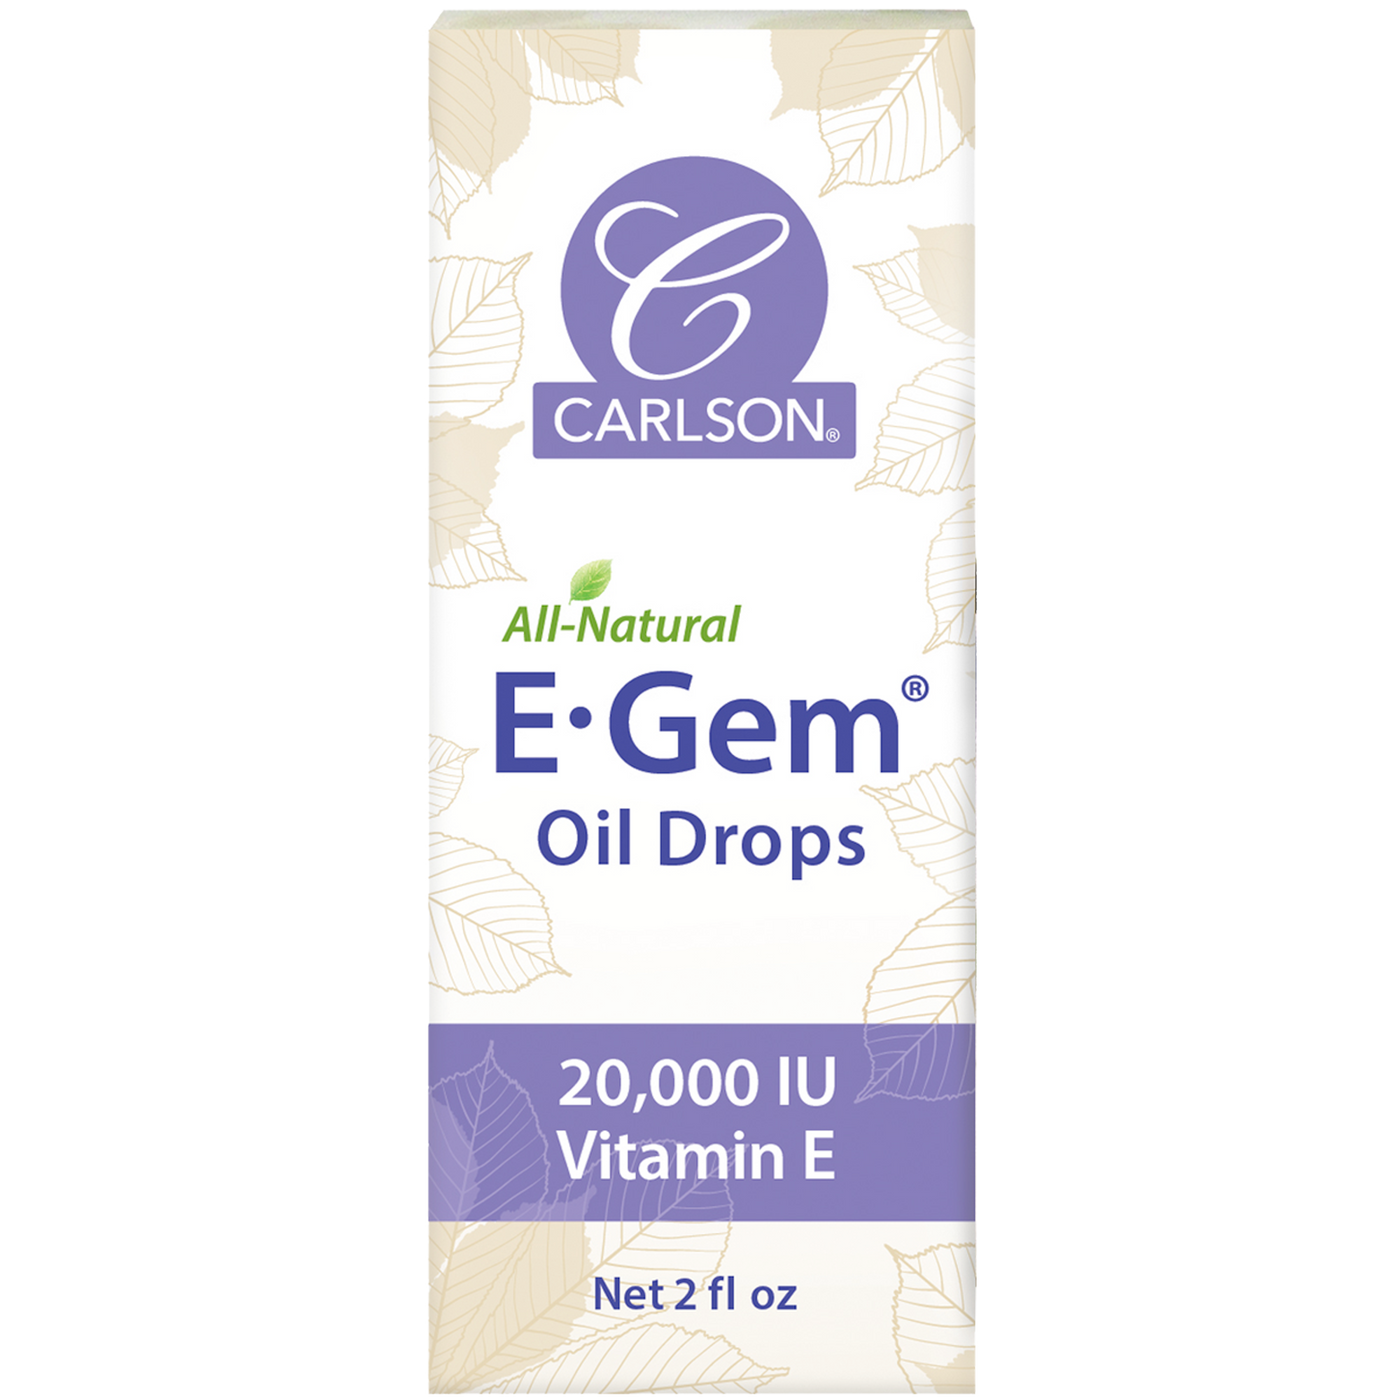 E-Gem Oil Drops  Curated Wellness